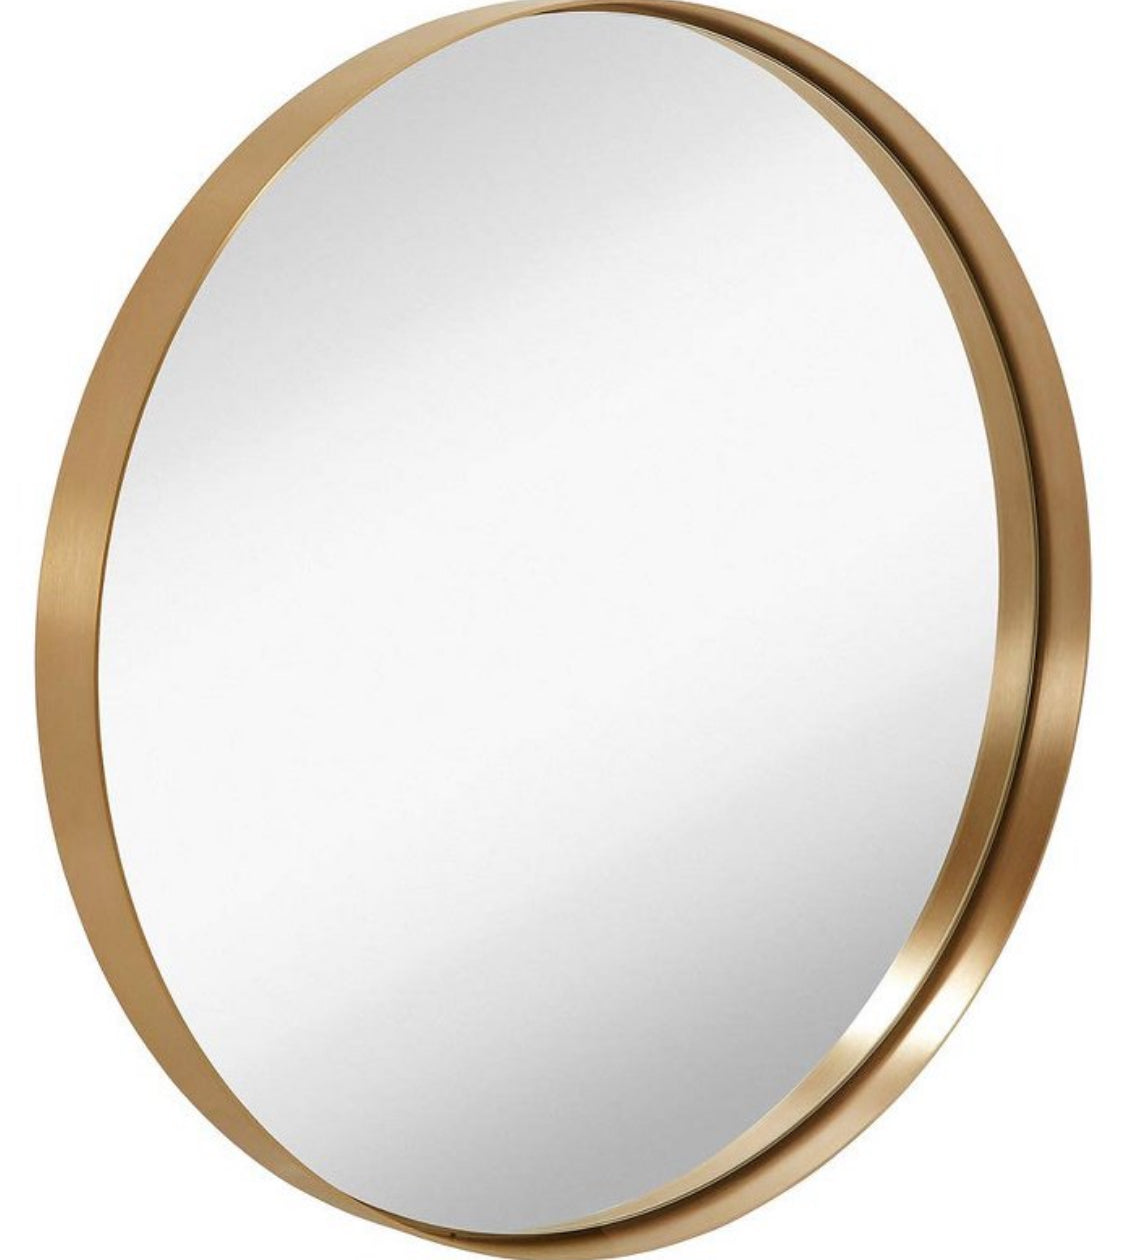 24" Gold Circle Deep Set Metal Round Frame Mirror Contemporary Gold Wall
Mirror